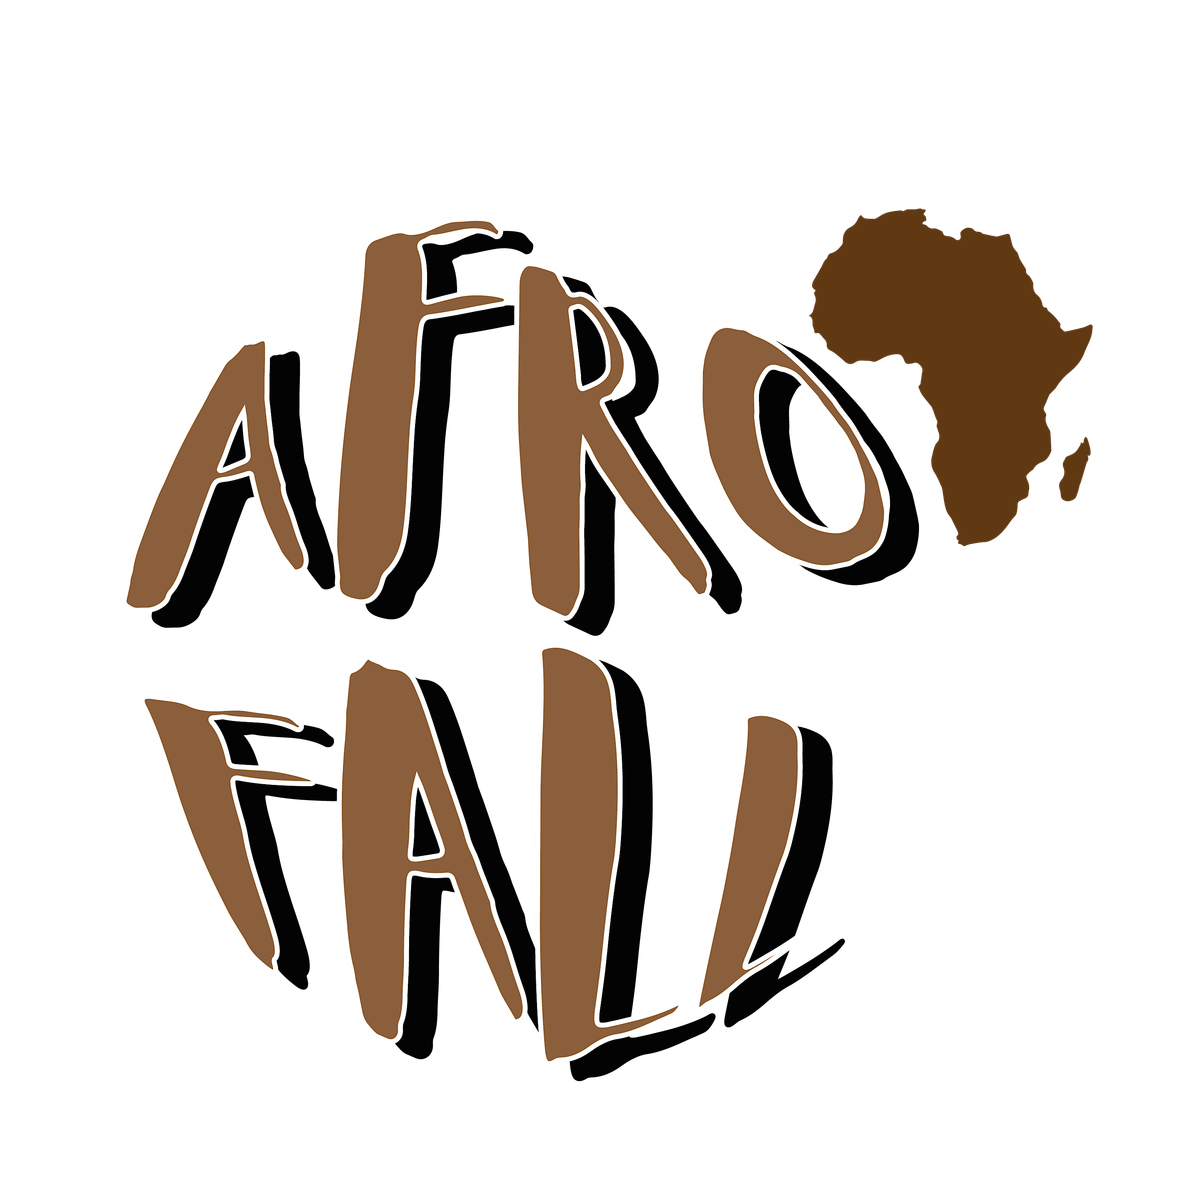 Afro Fall festival